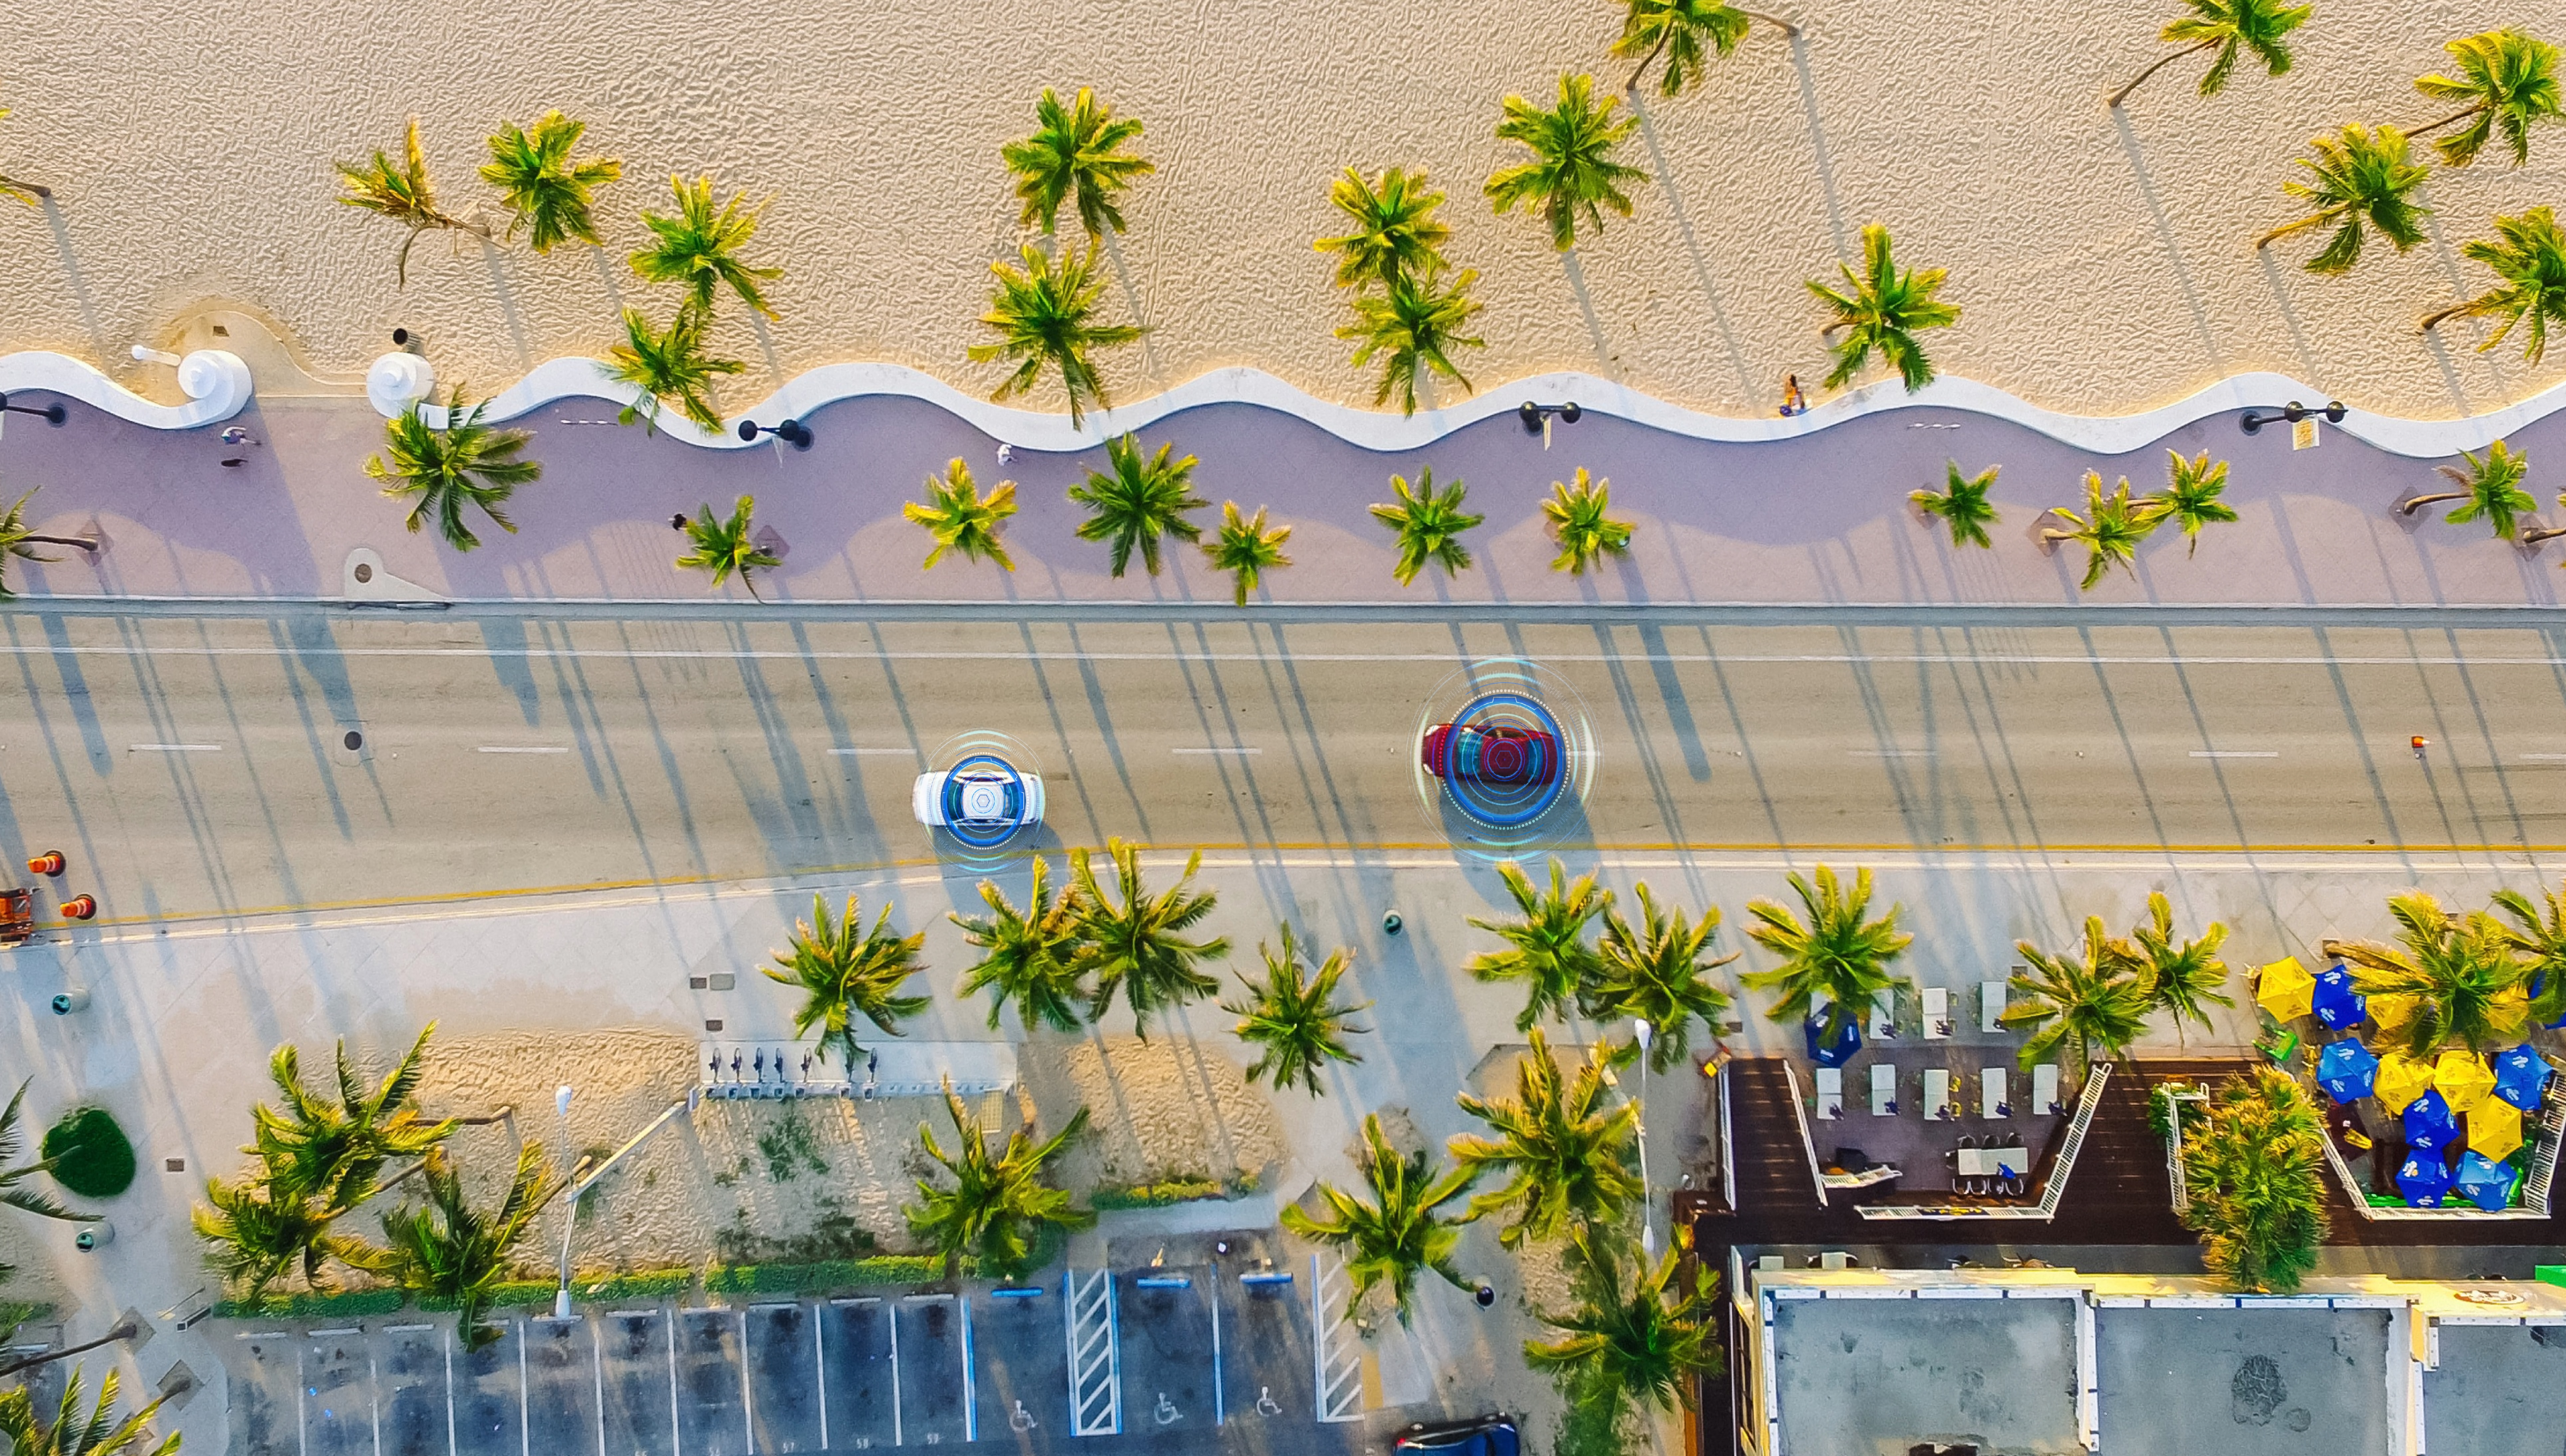 Self-driving cars on a beach road